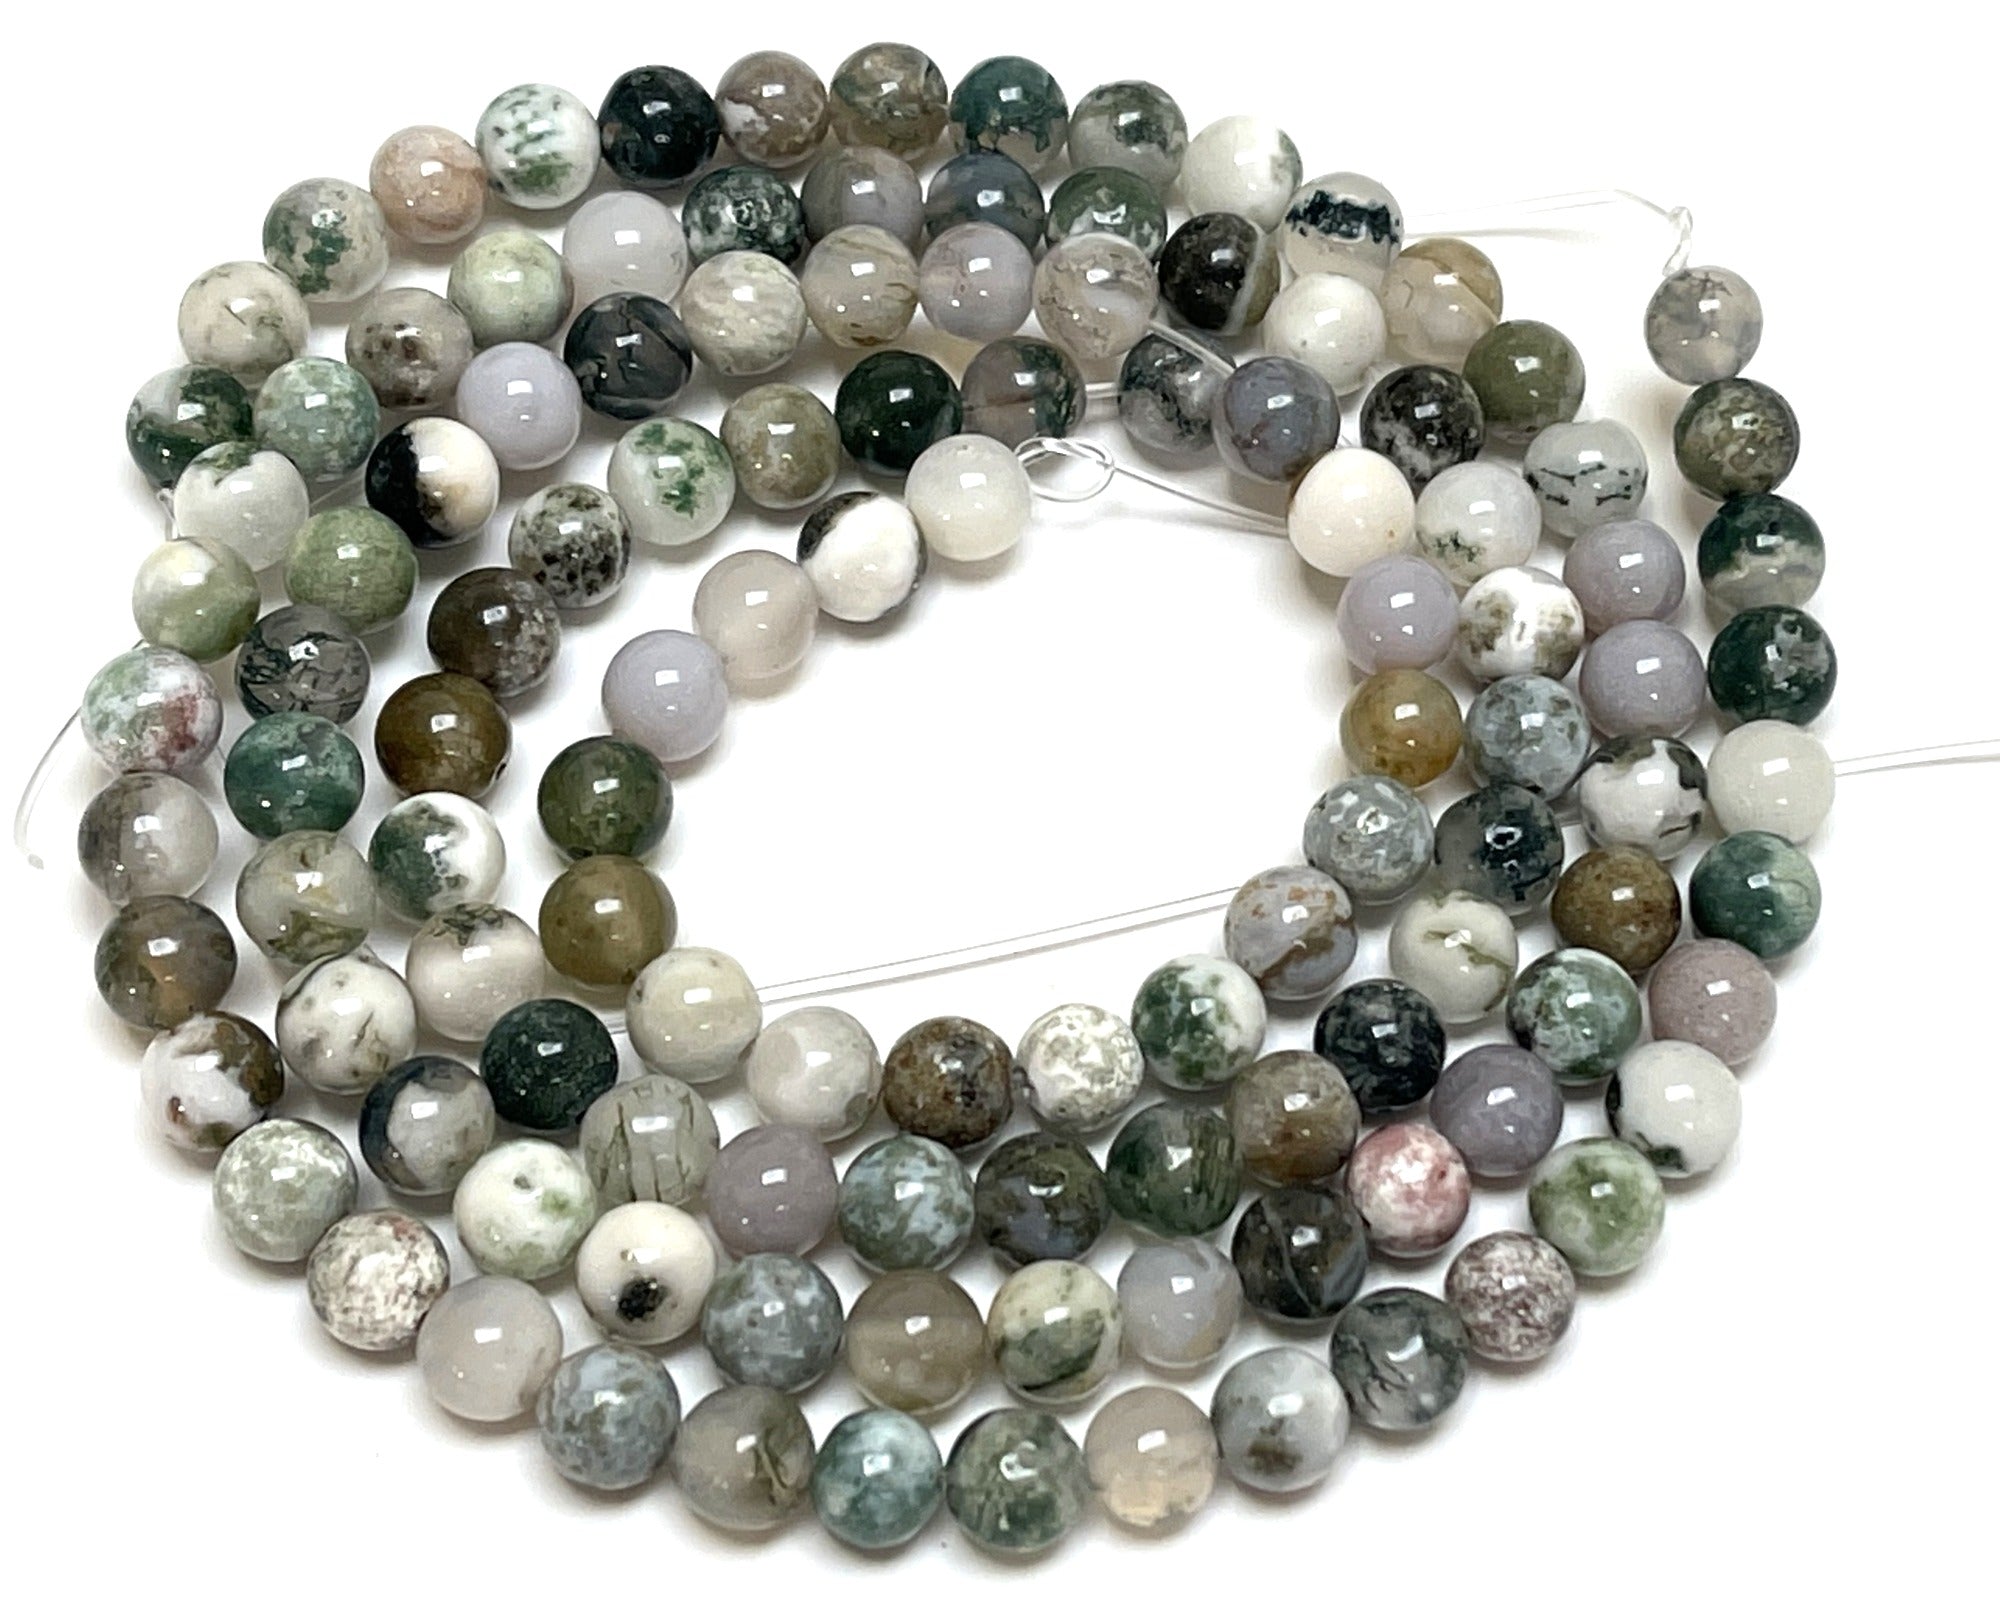 Tree Agate 6mm round natural gemstone beads 15" strand